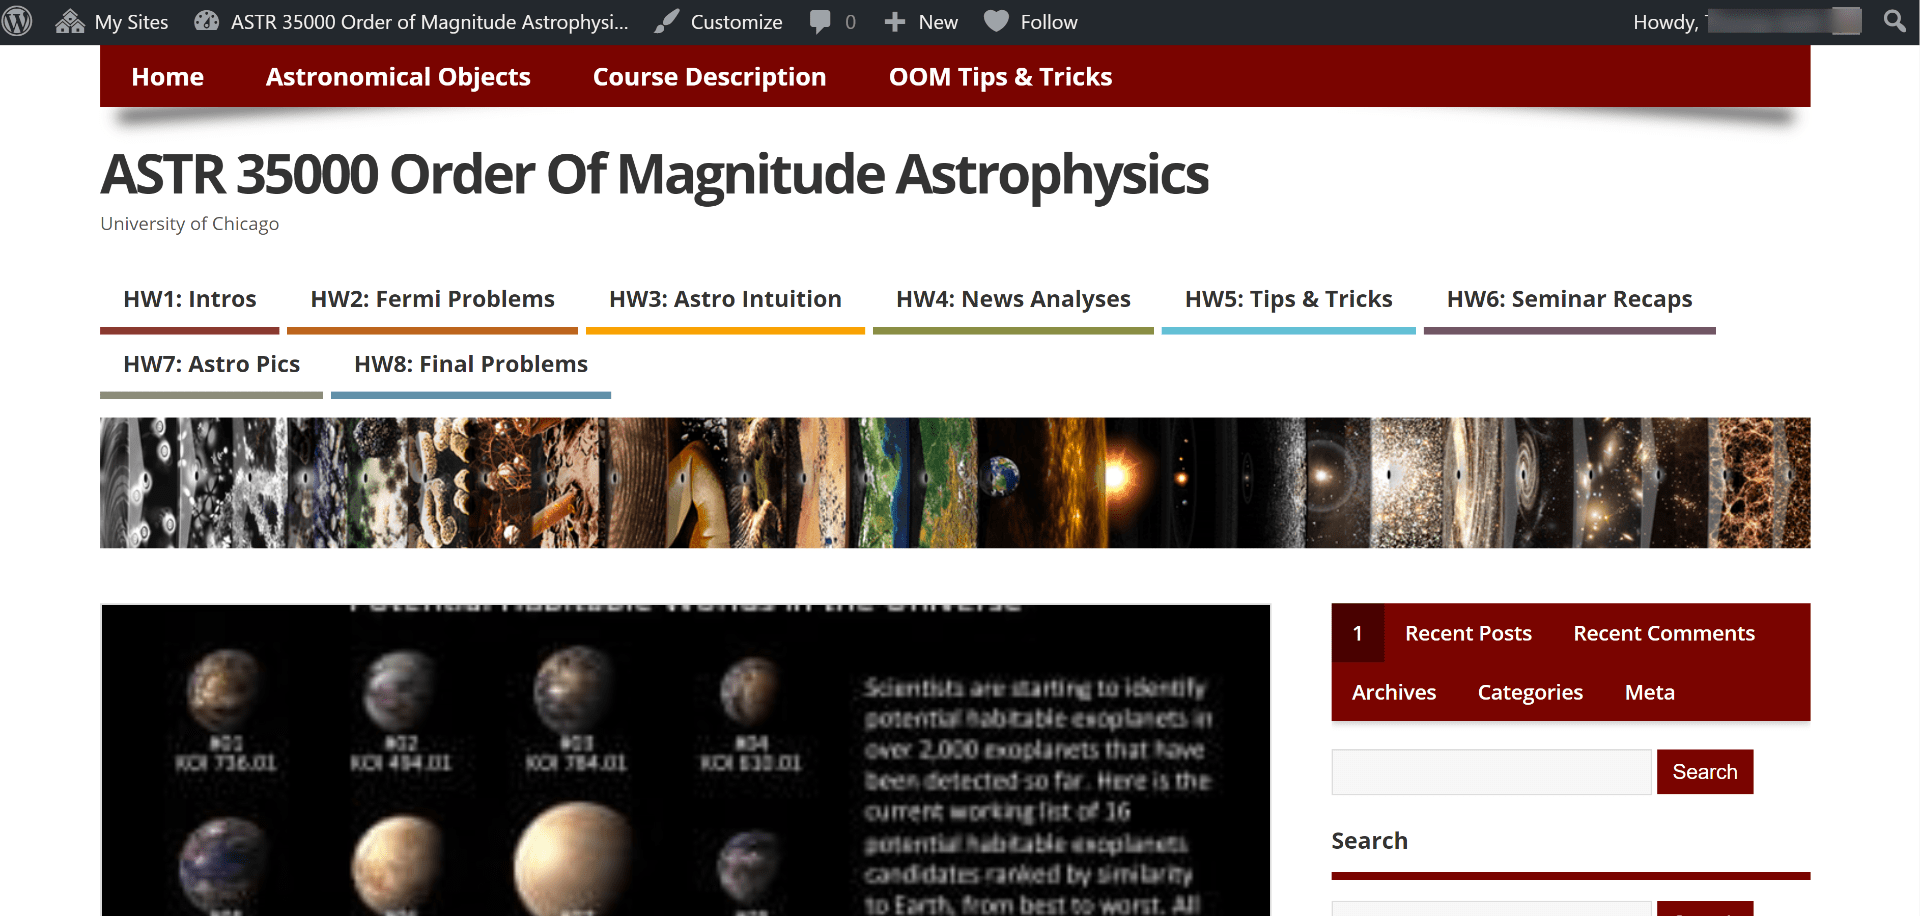 Home screen of Order of Magnitude Astrophysics course blog